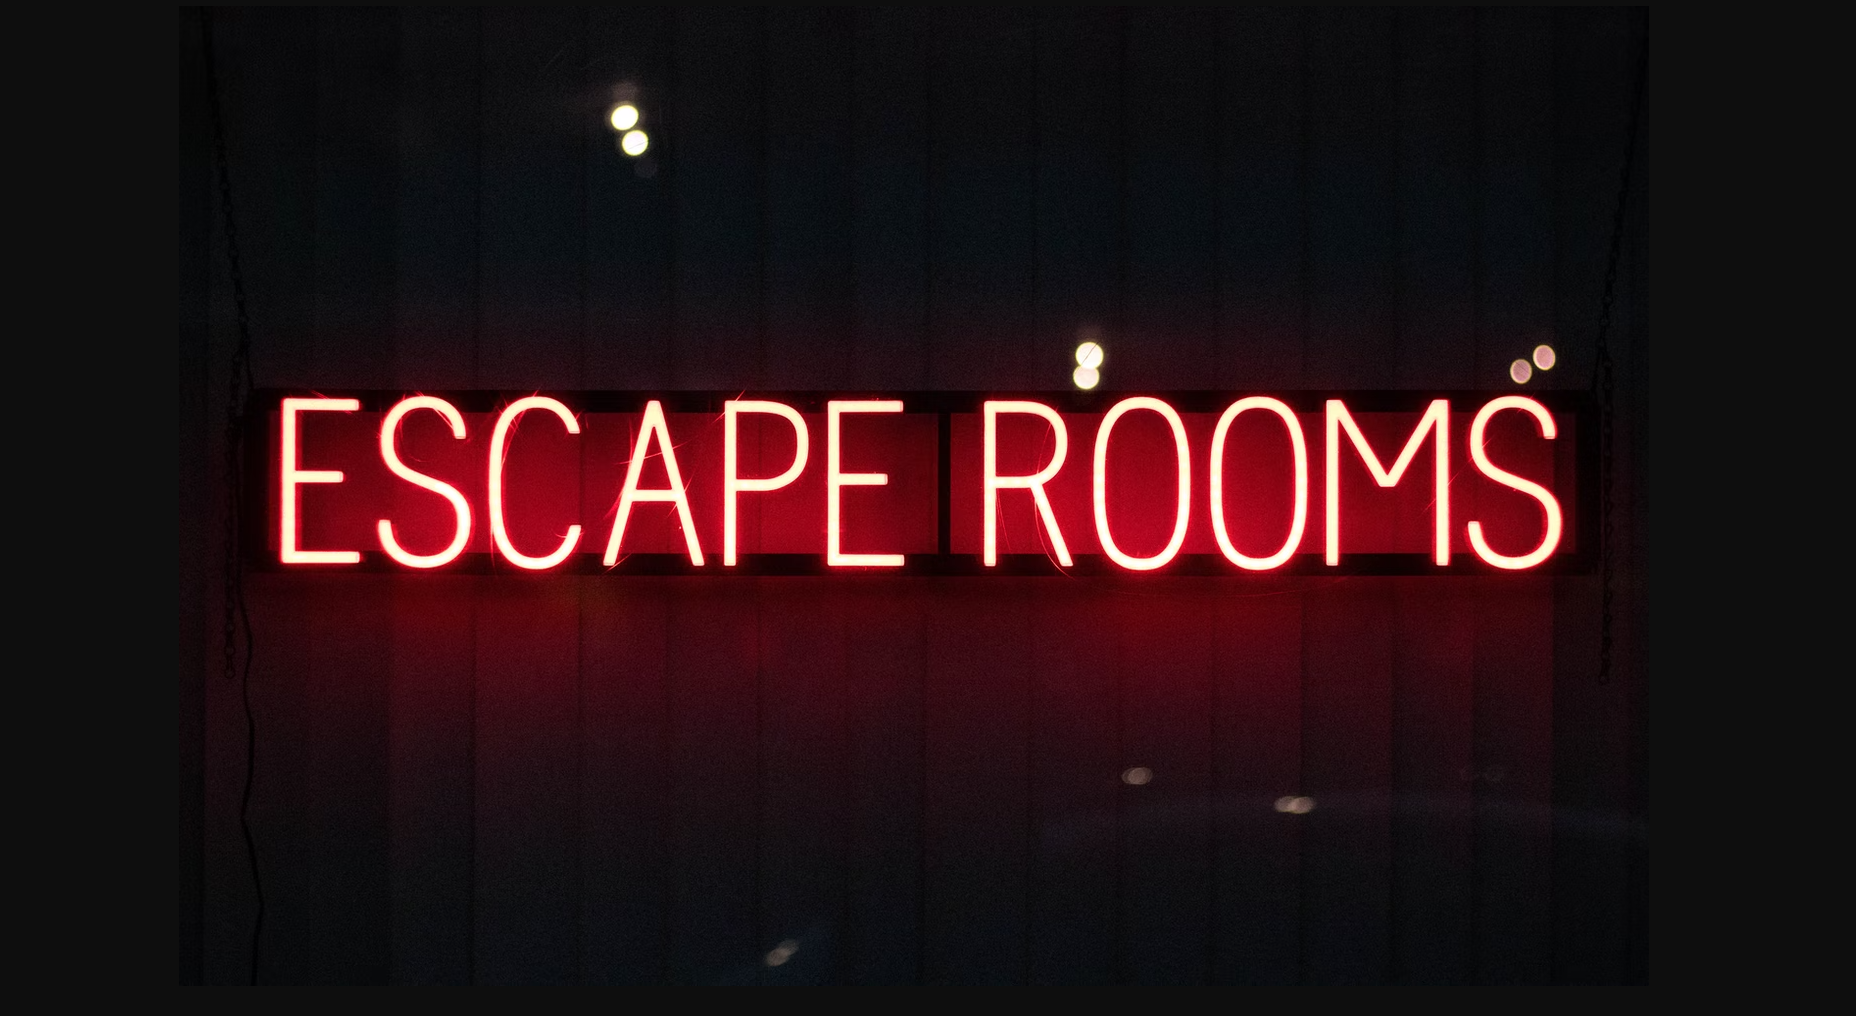 Escape Rooms in Schwerin werden erweitert